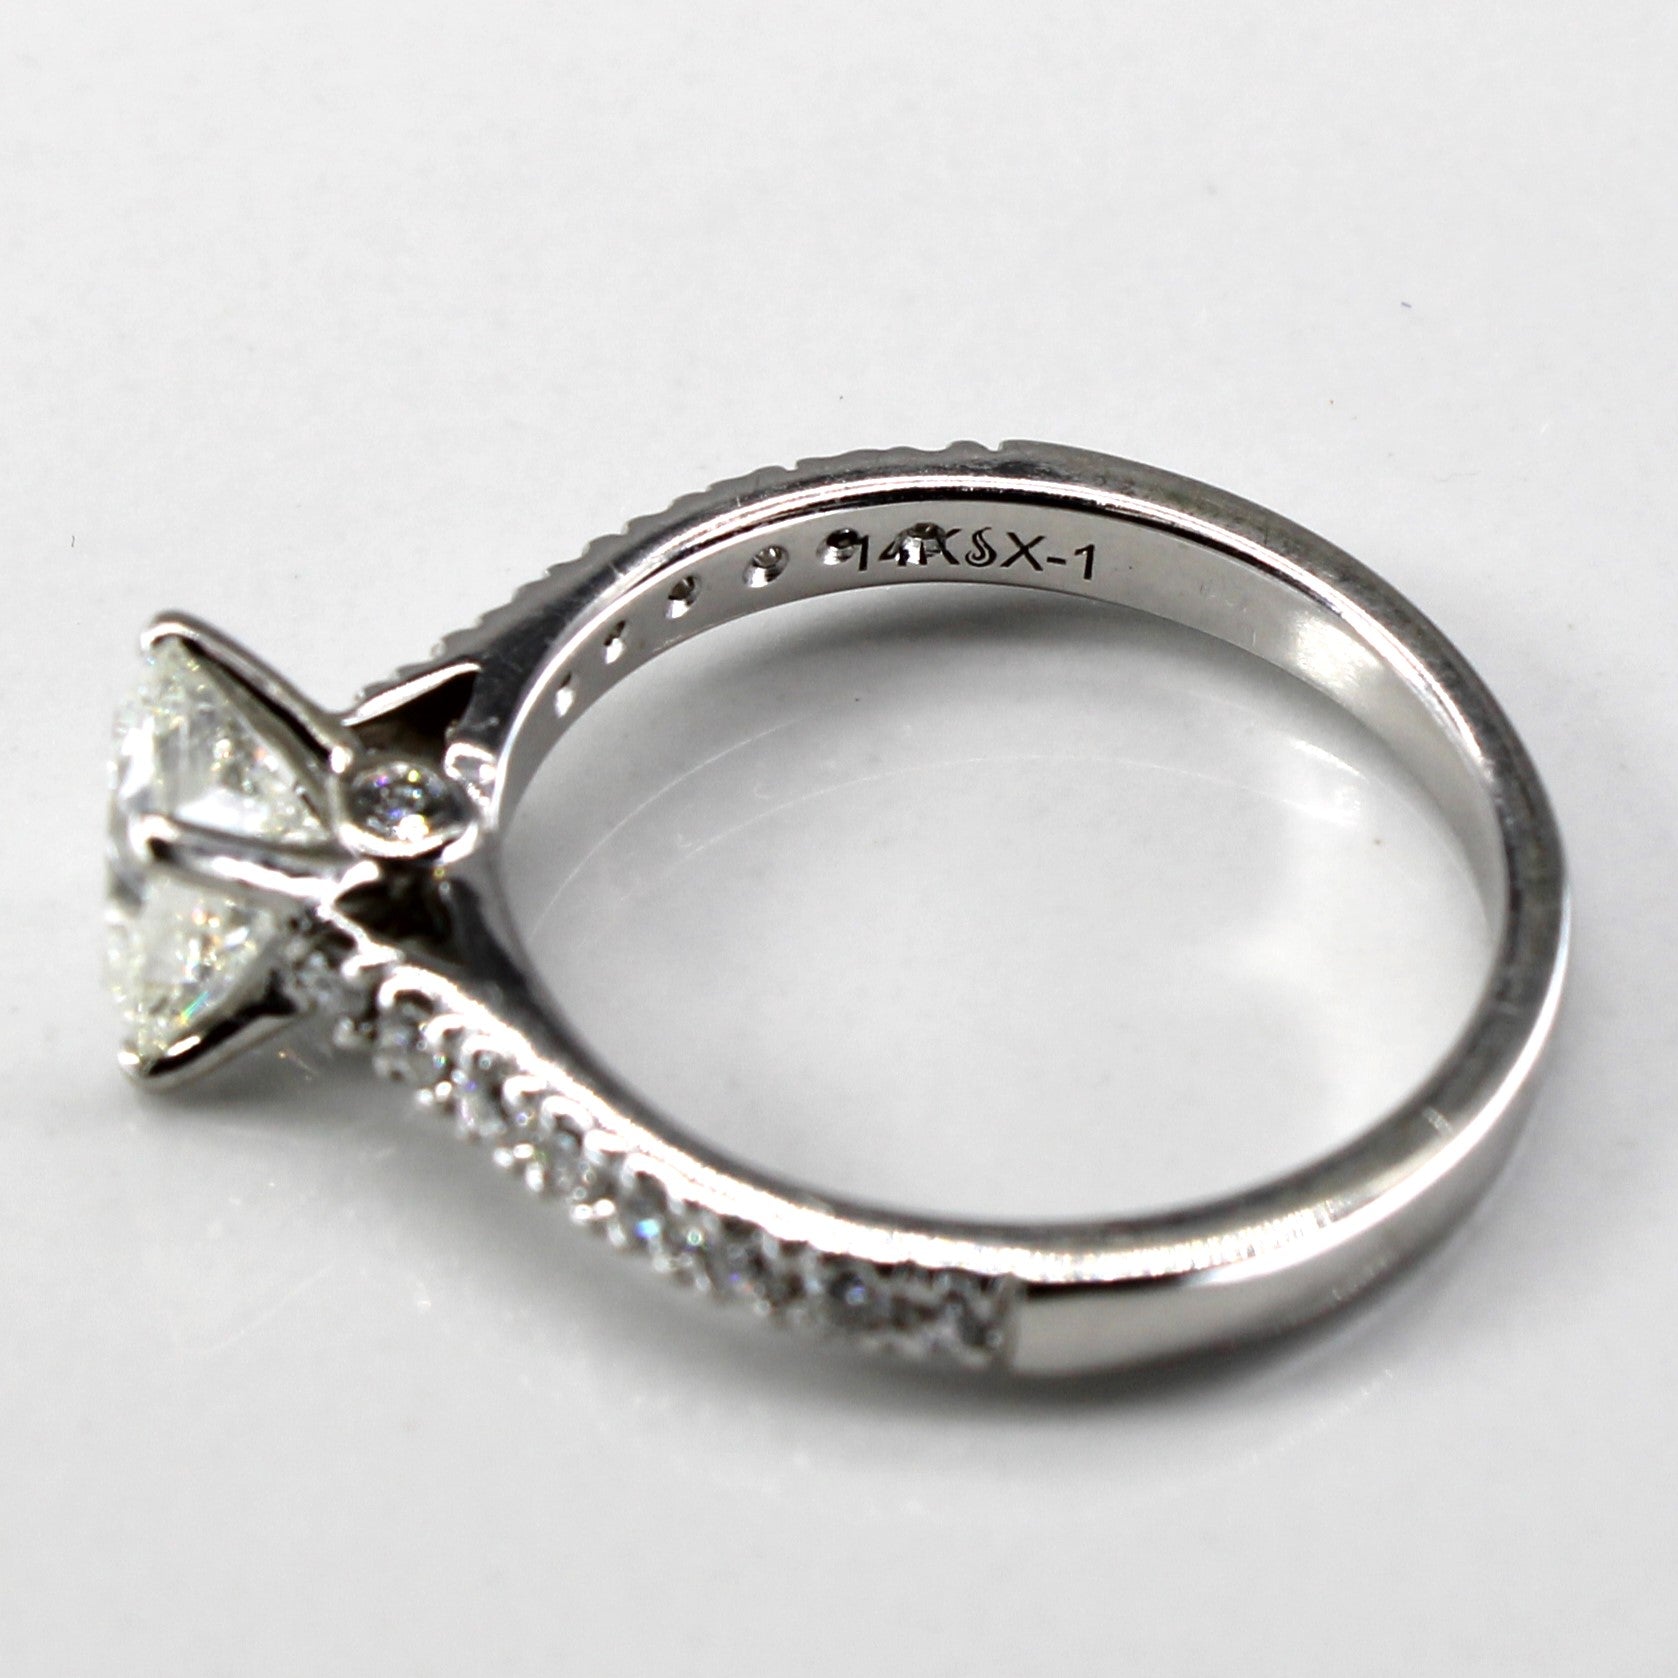 Cushion Diamond Engagement Ring | 1.03ctw | SZ 5.75 |